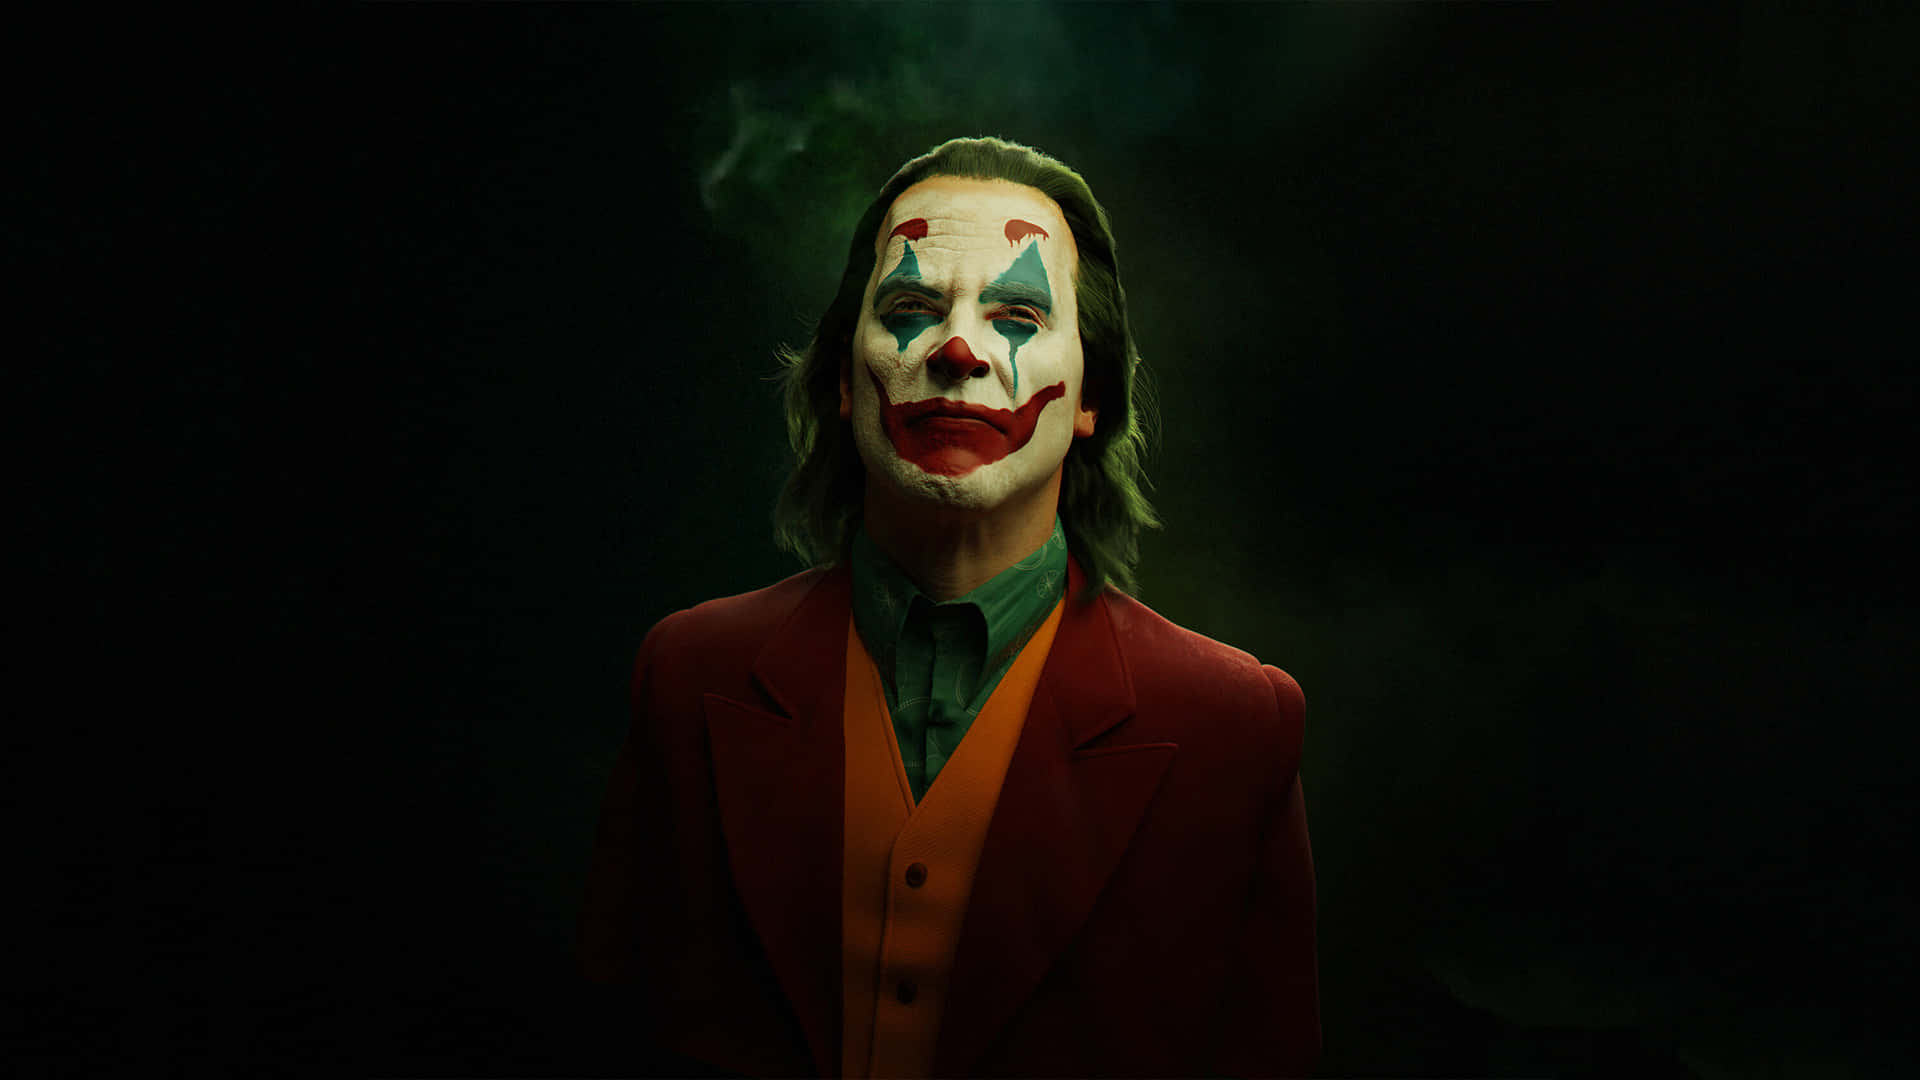 Enigmatic Joker In The Spotlight